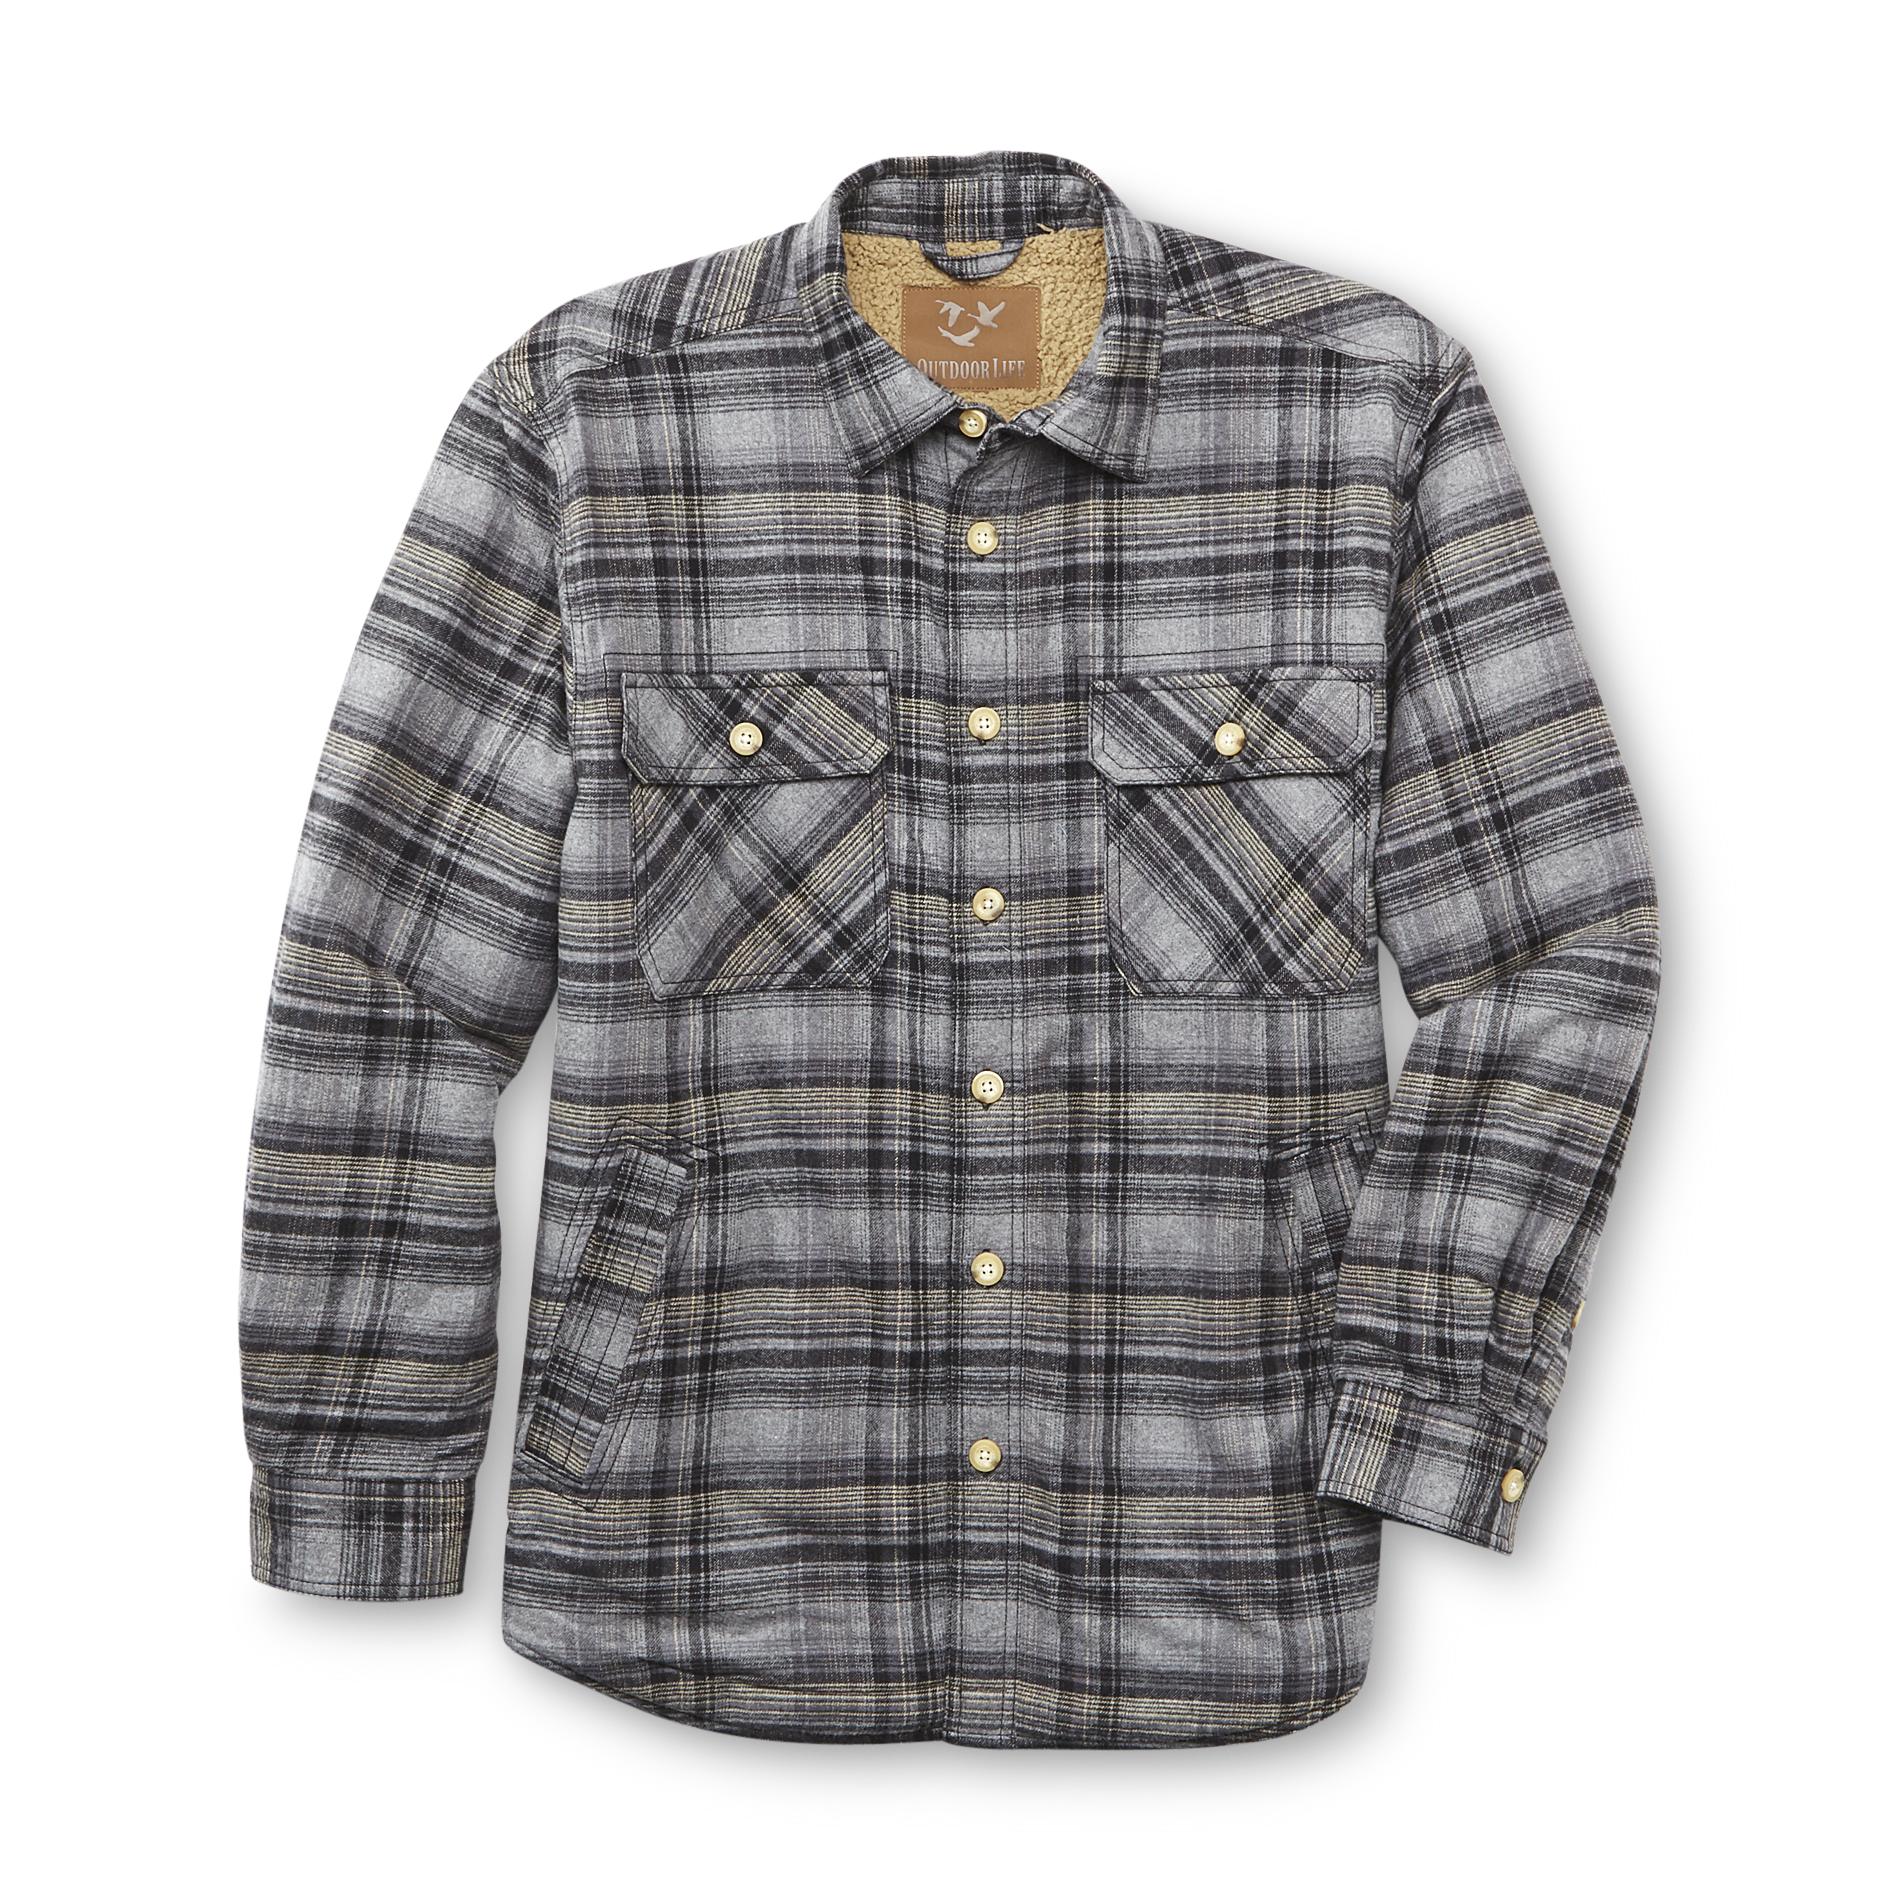 Outdoor Life&reg; Men's Sherpa-Lined Flannel Shirt Jacket - Plaid